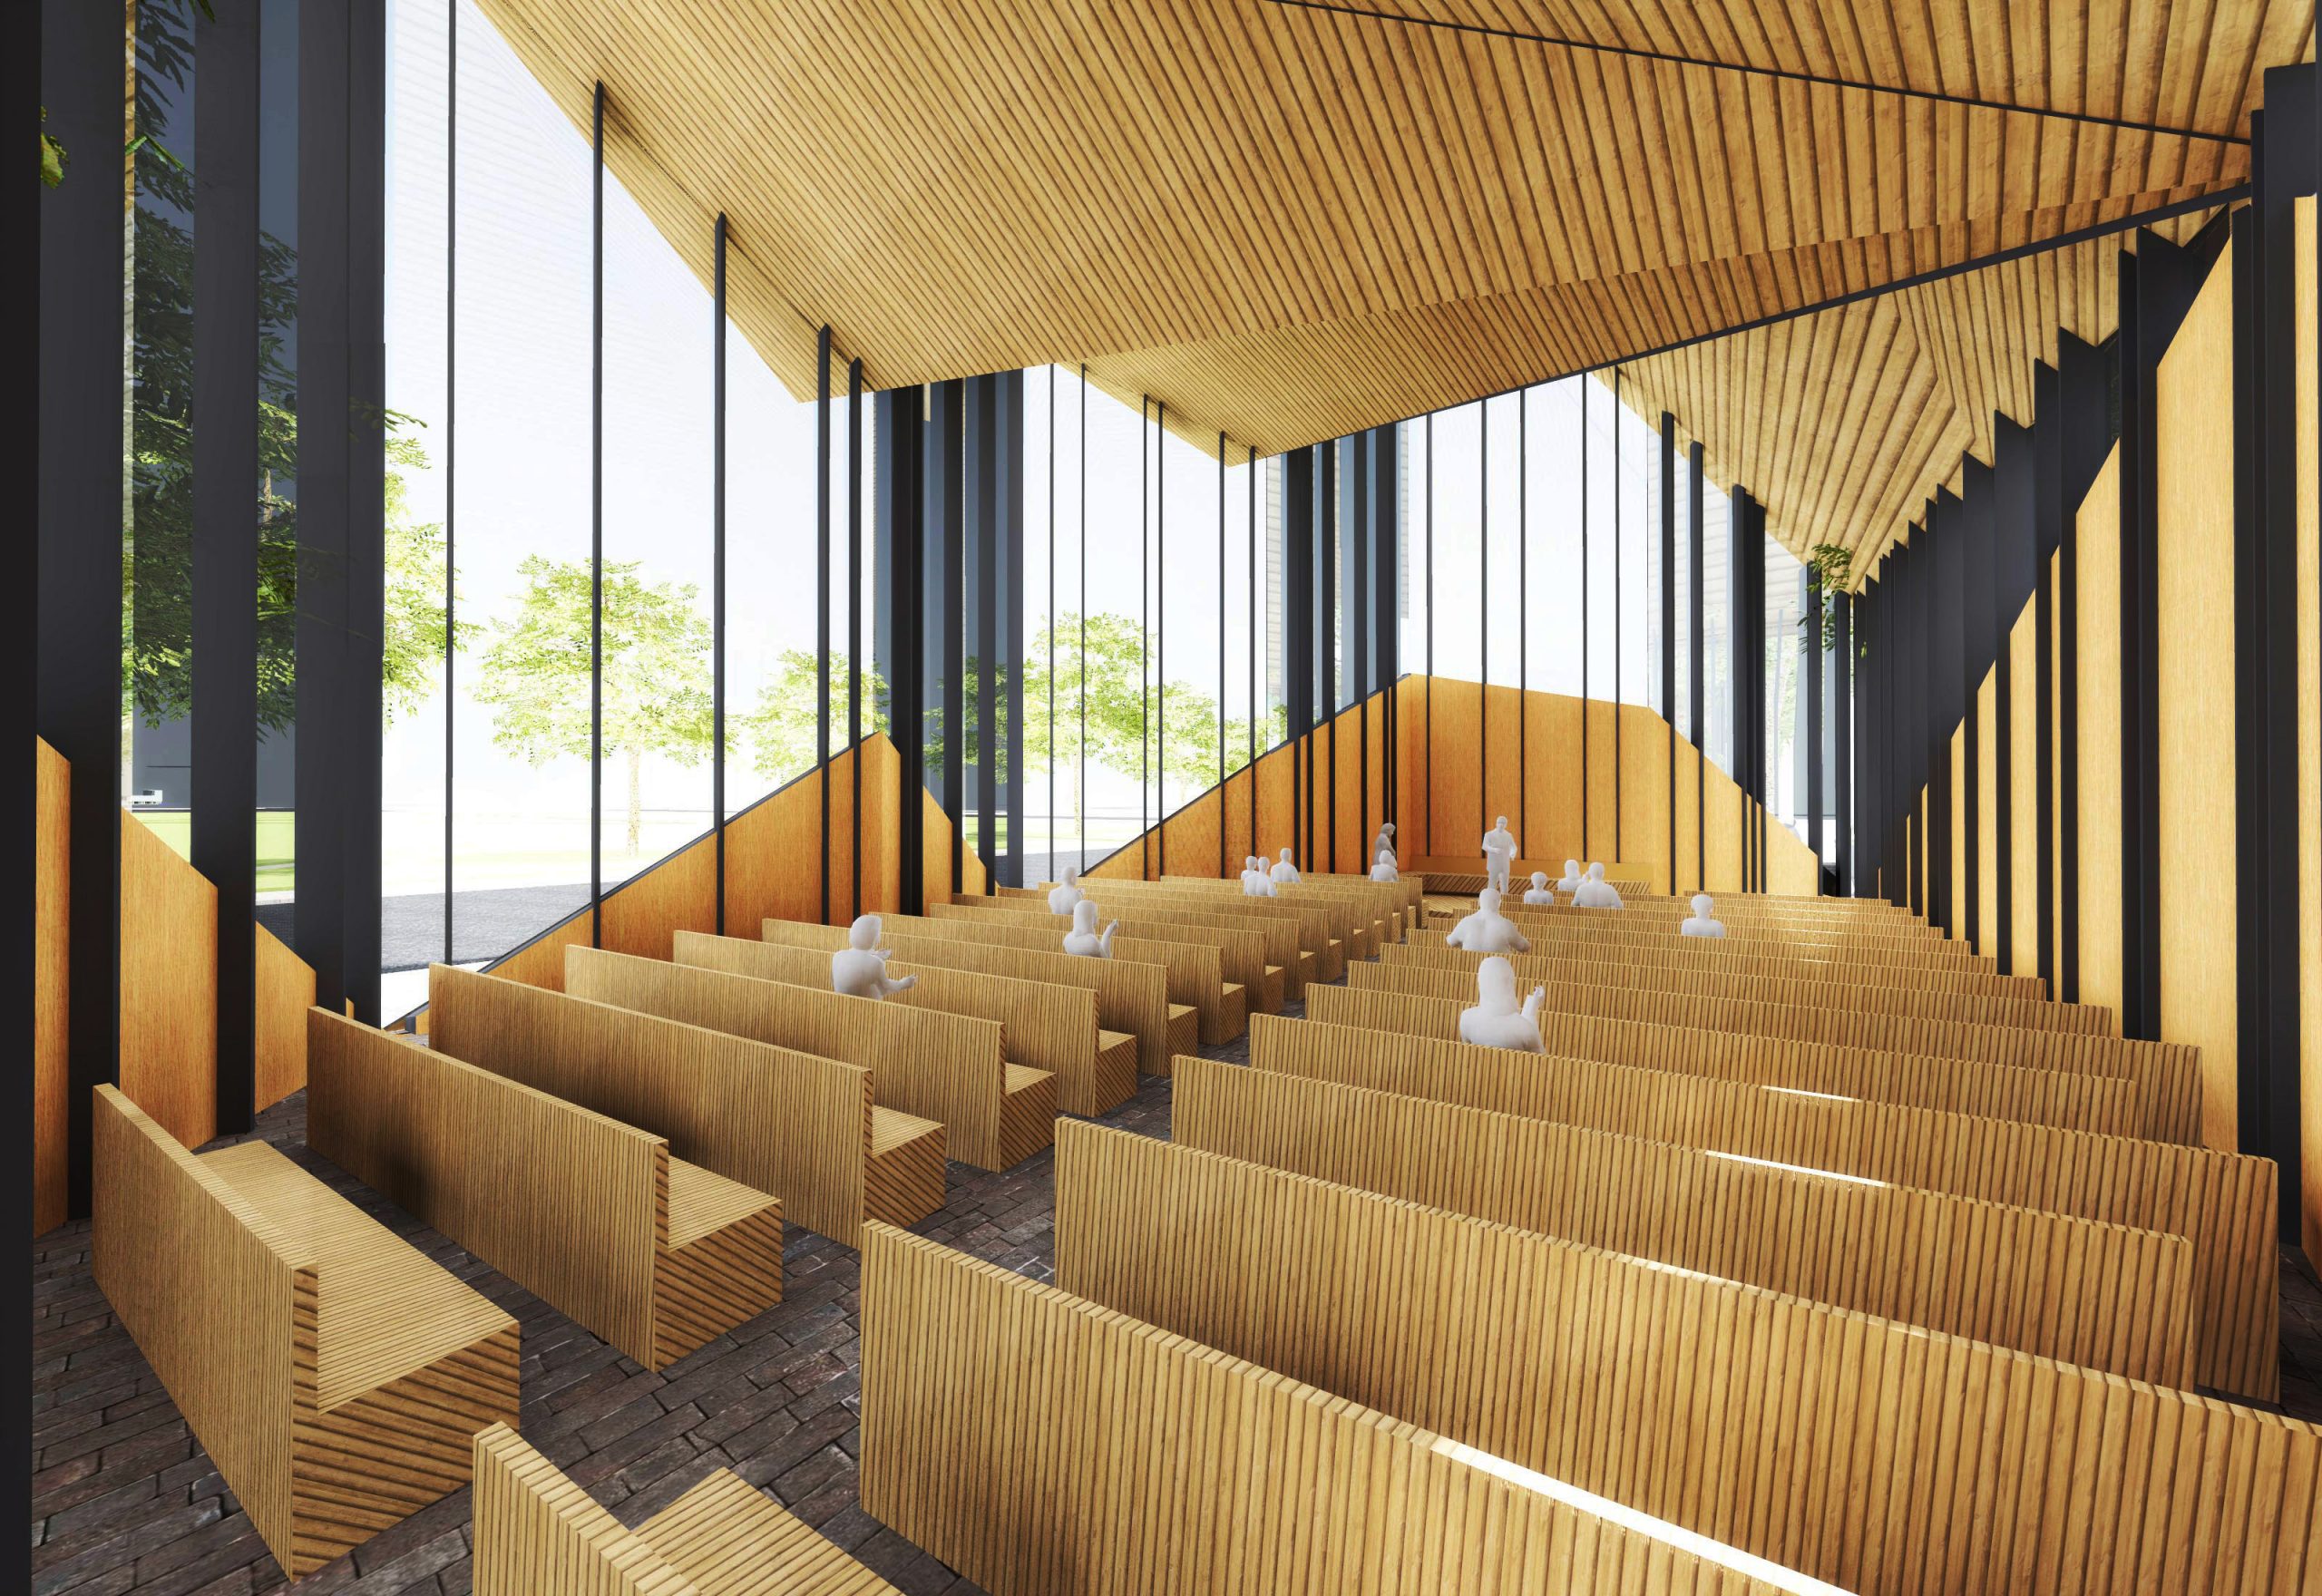 chapel architecture and design